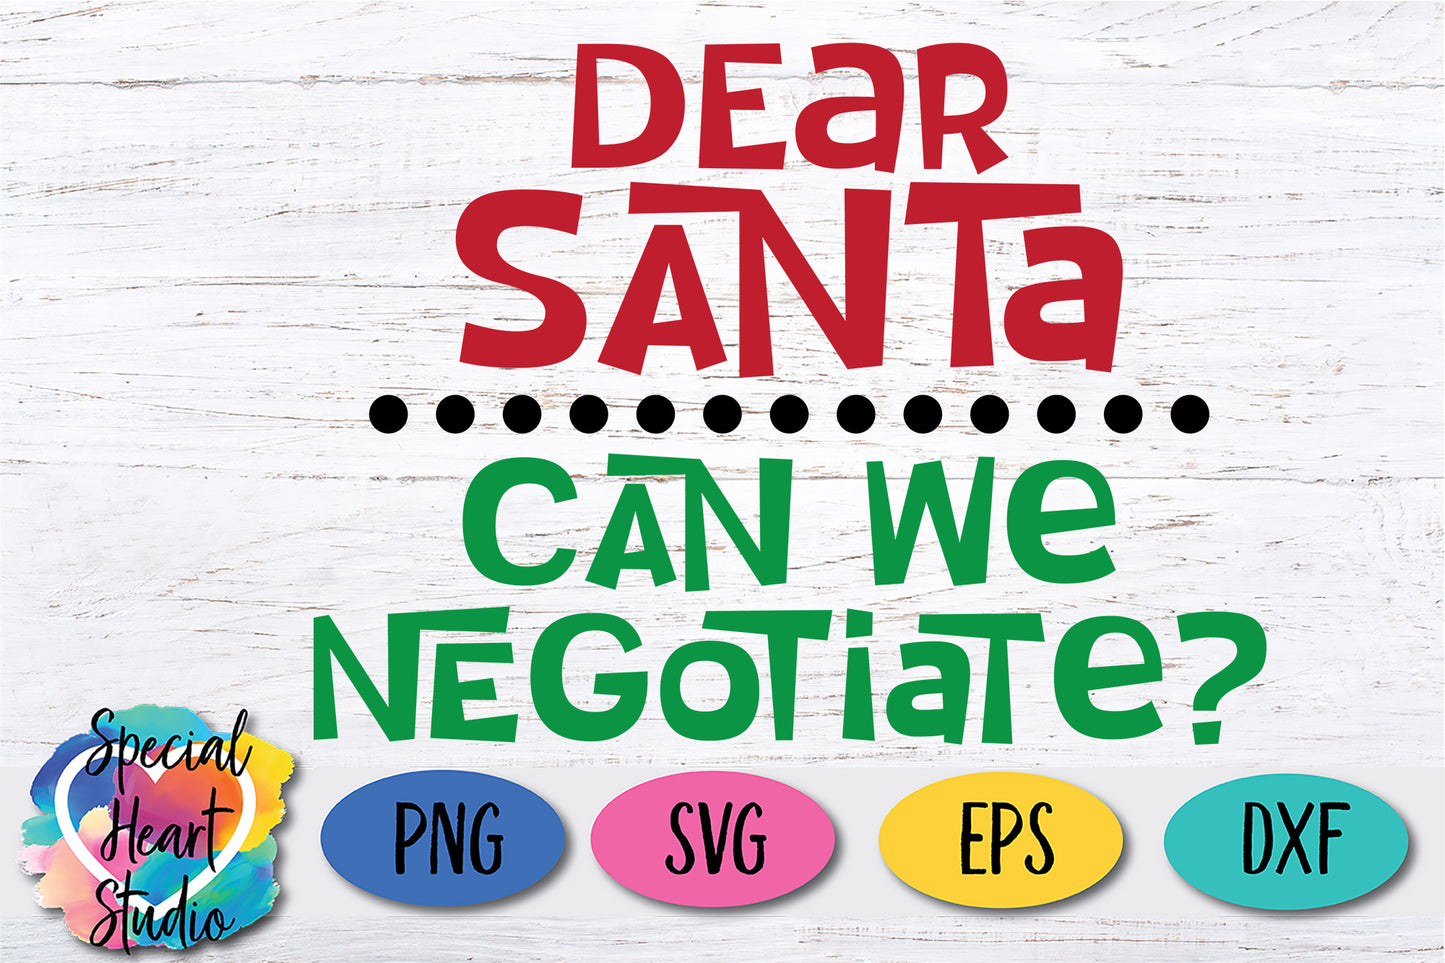 Dear Santa Can We Negotiate?